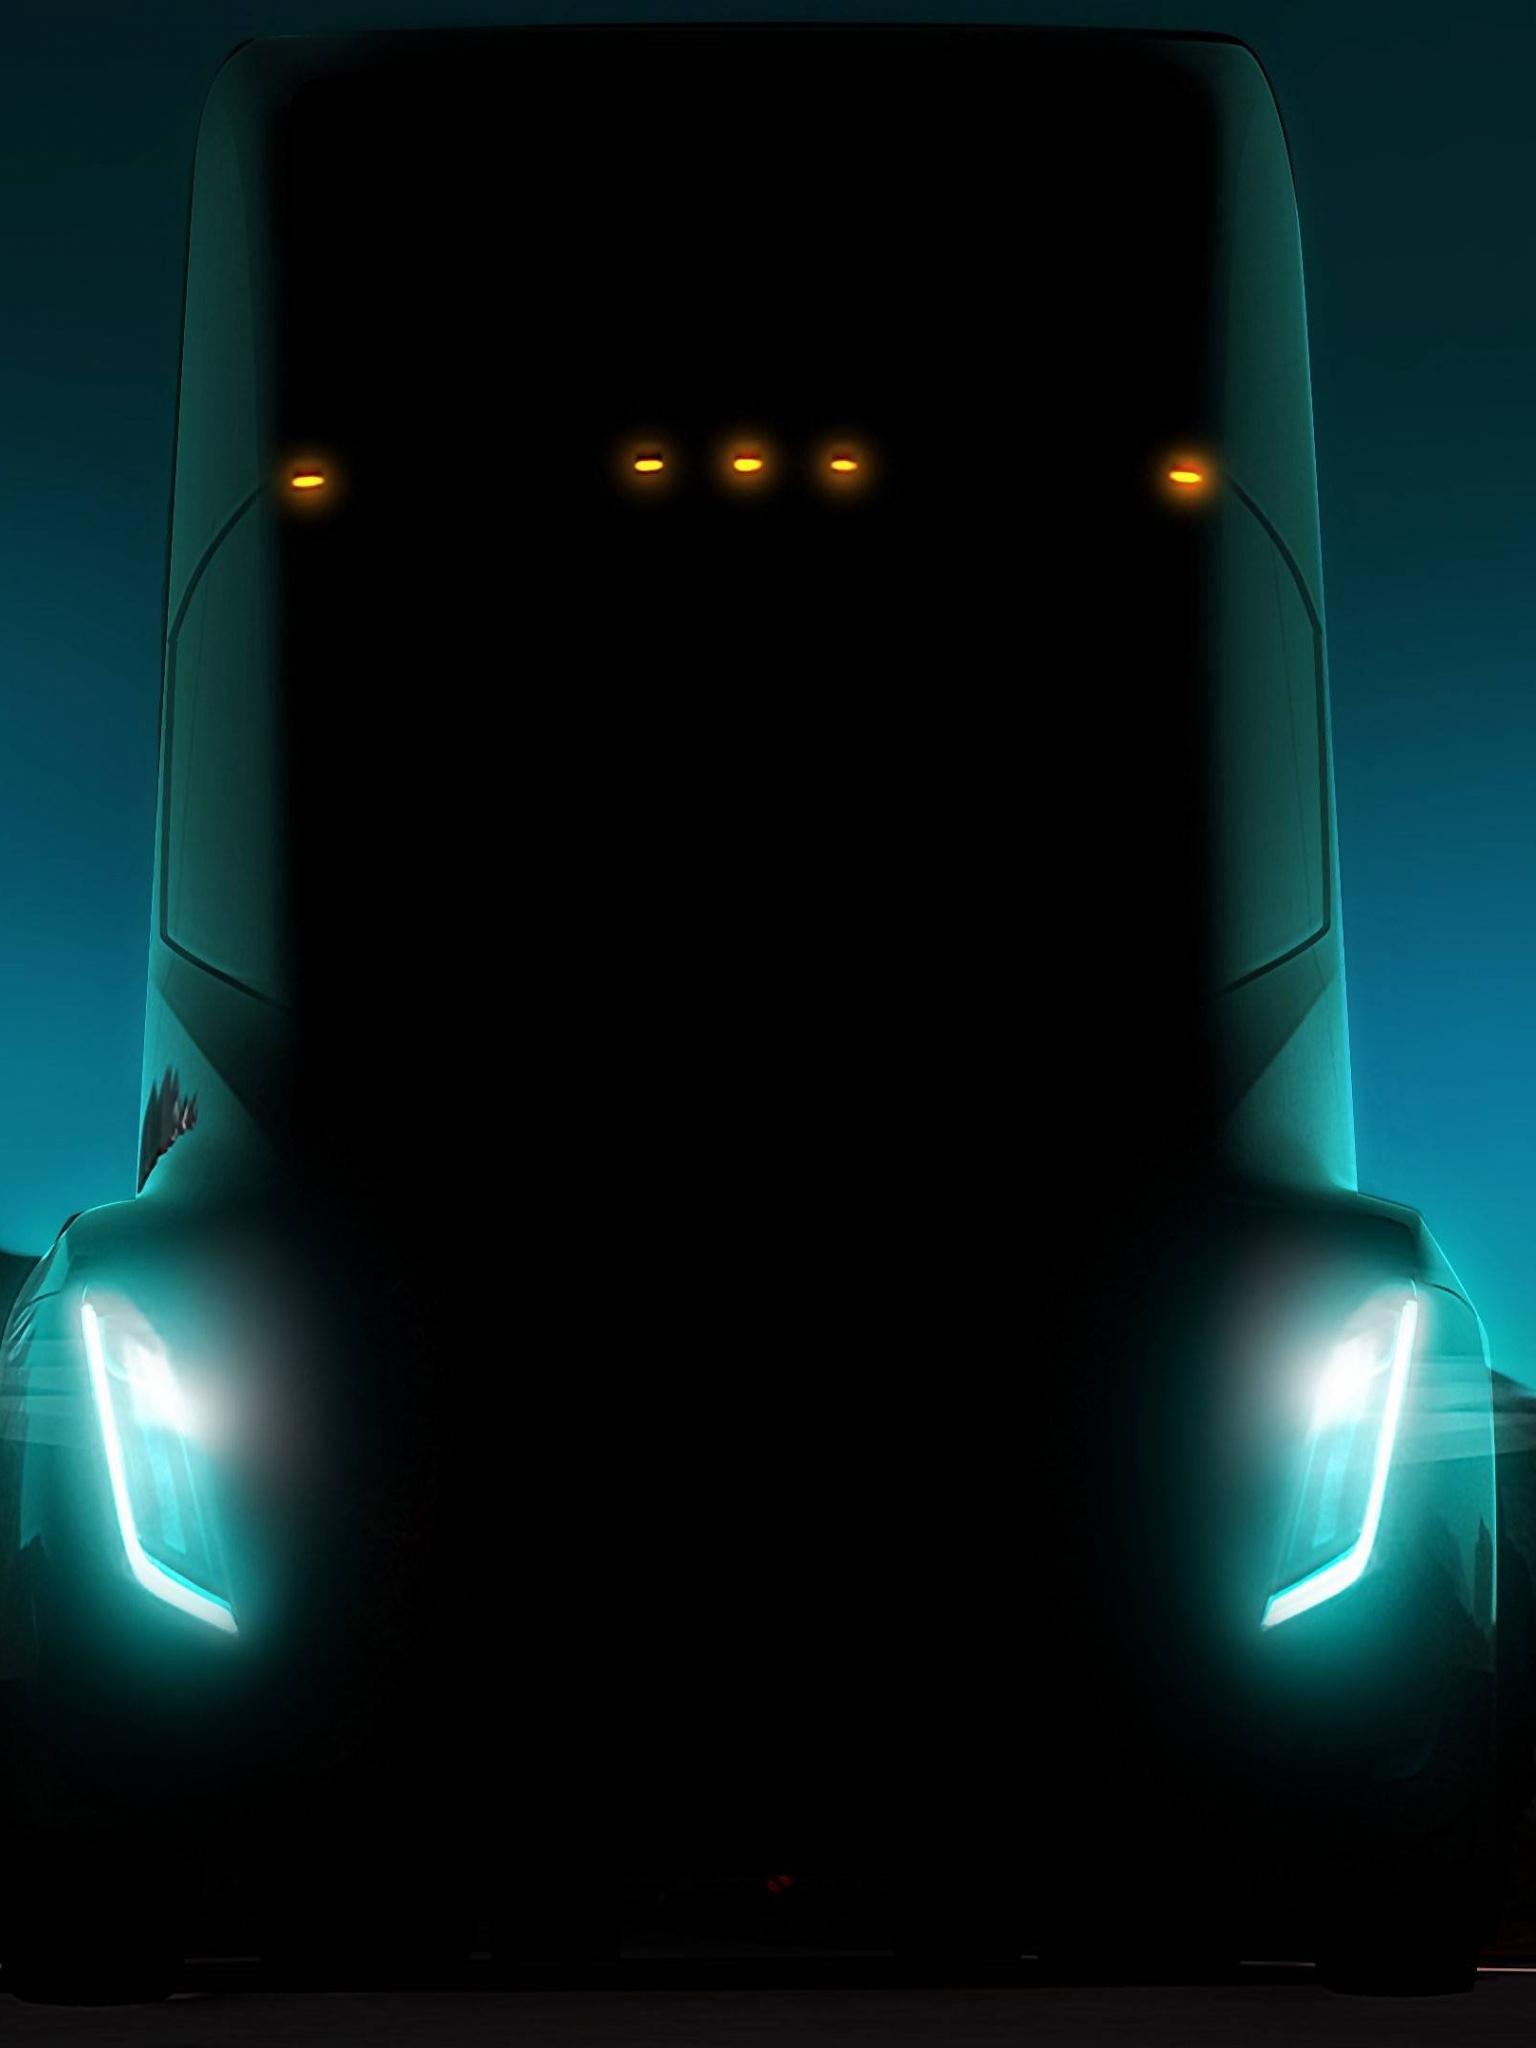 Free download Tesla Semi Truck Electric Car Wallpaper